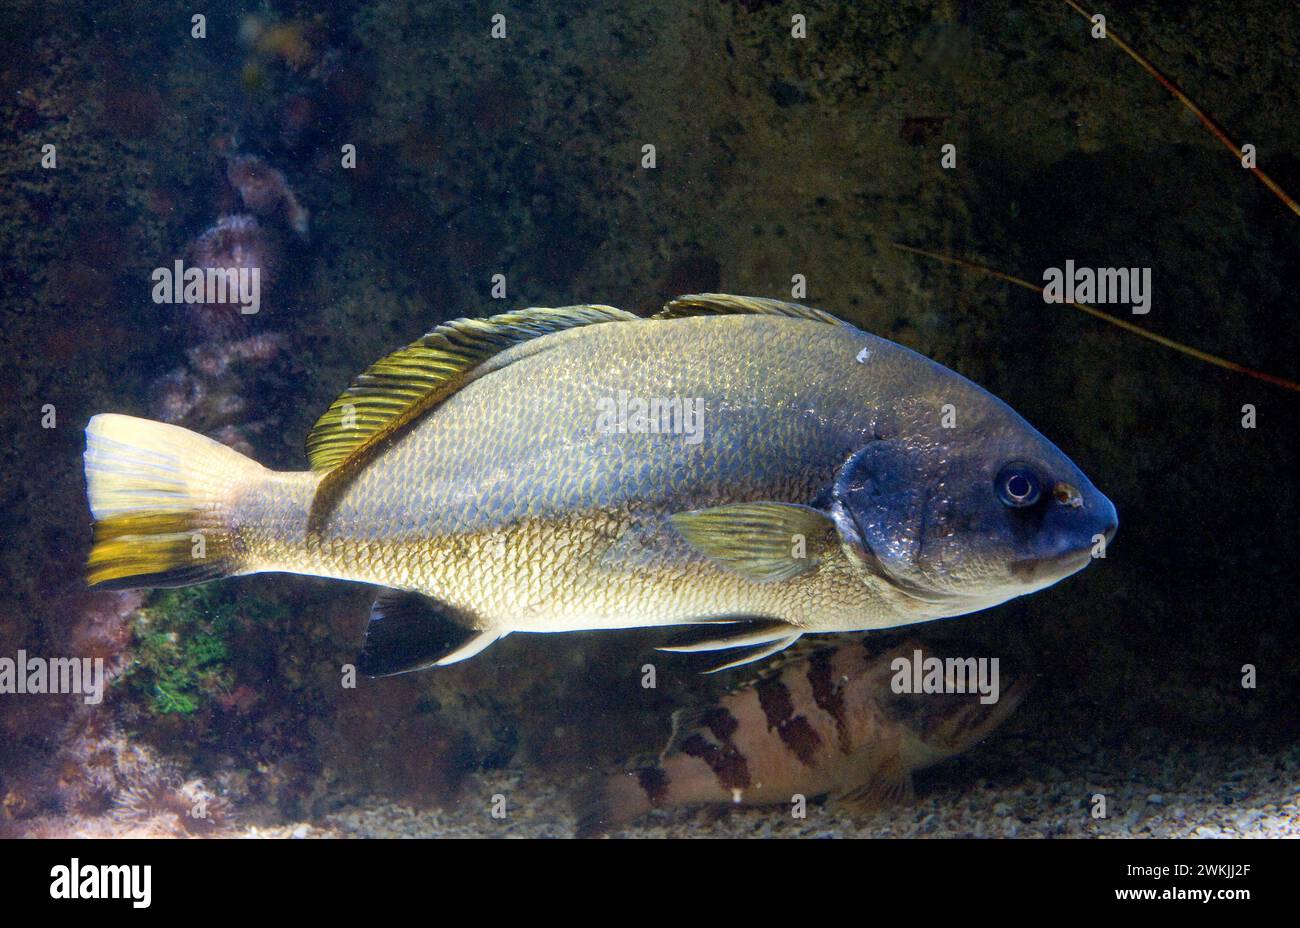 Corb or brown meagre (Sciaena umbra) is a marine fish native to Mediterranean Sea and eastern Atlantic Ocean. Stock Photo